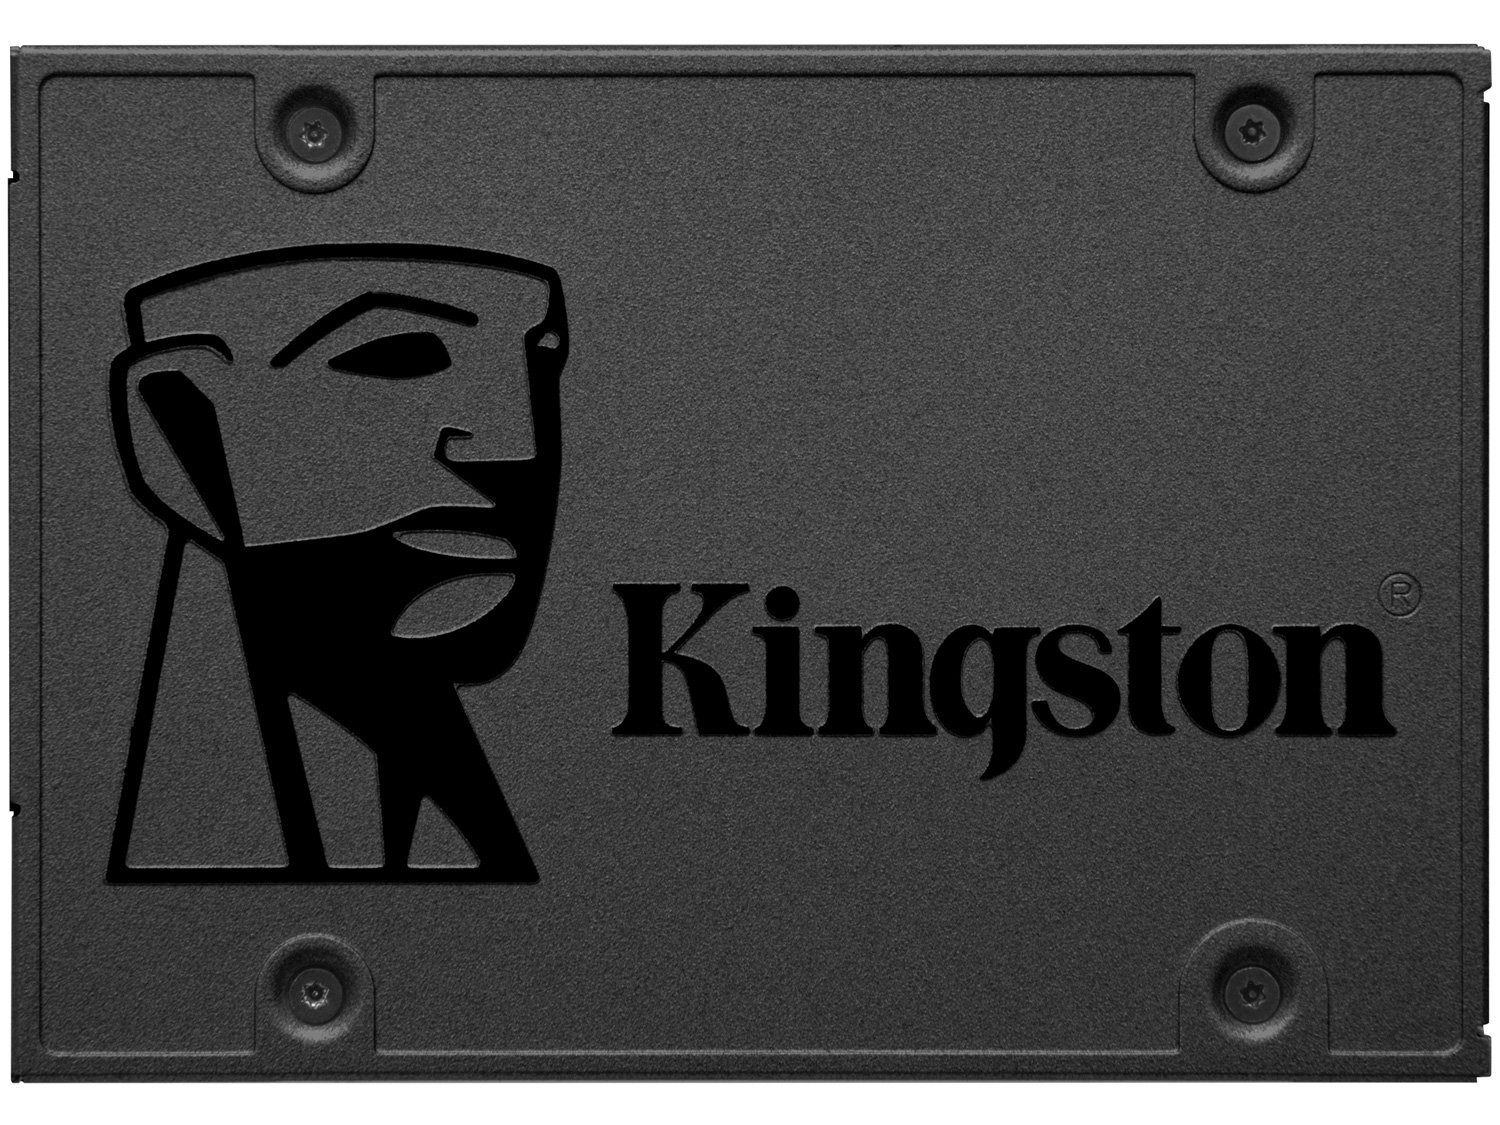 SSD 480GB Kingston Sata Rev. 3.0 - Leituras 500MB/s e Gravações 450MB/s A400 - 1